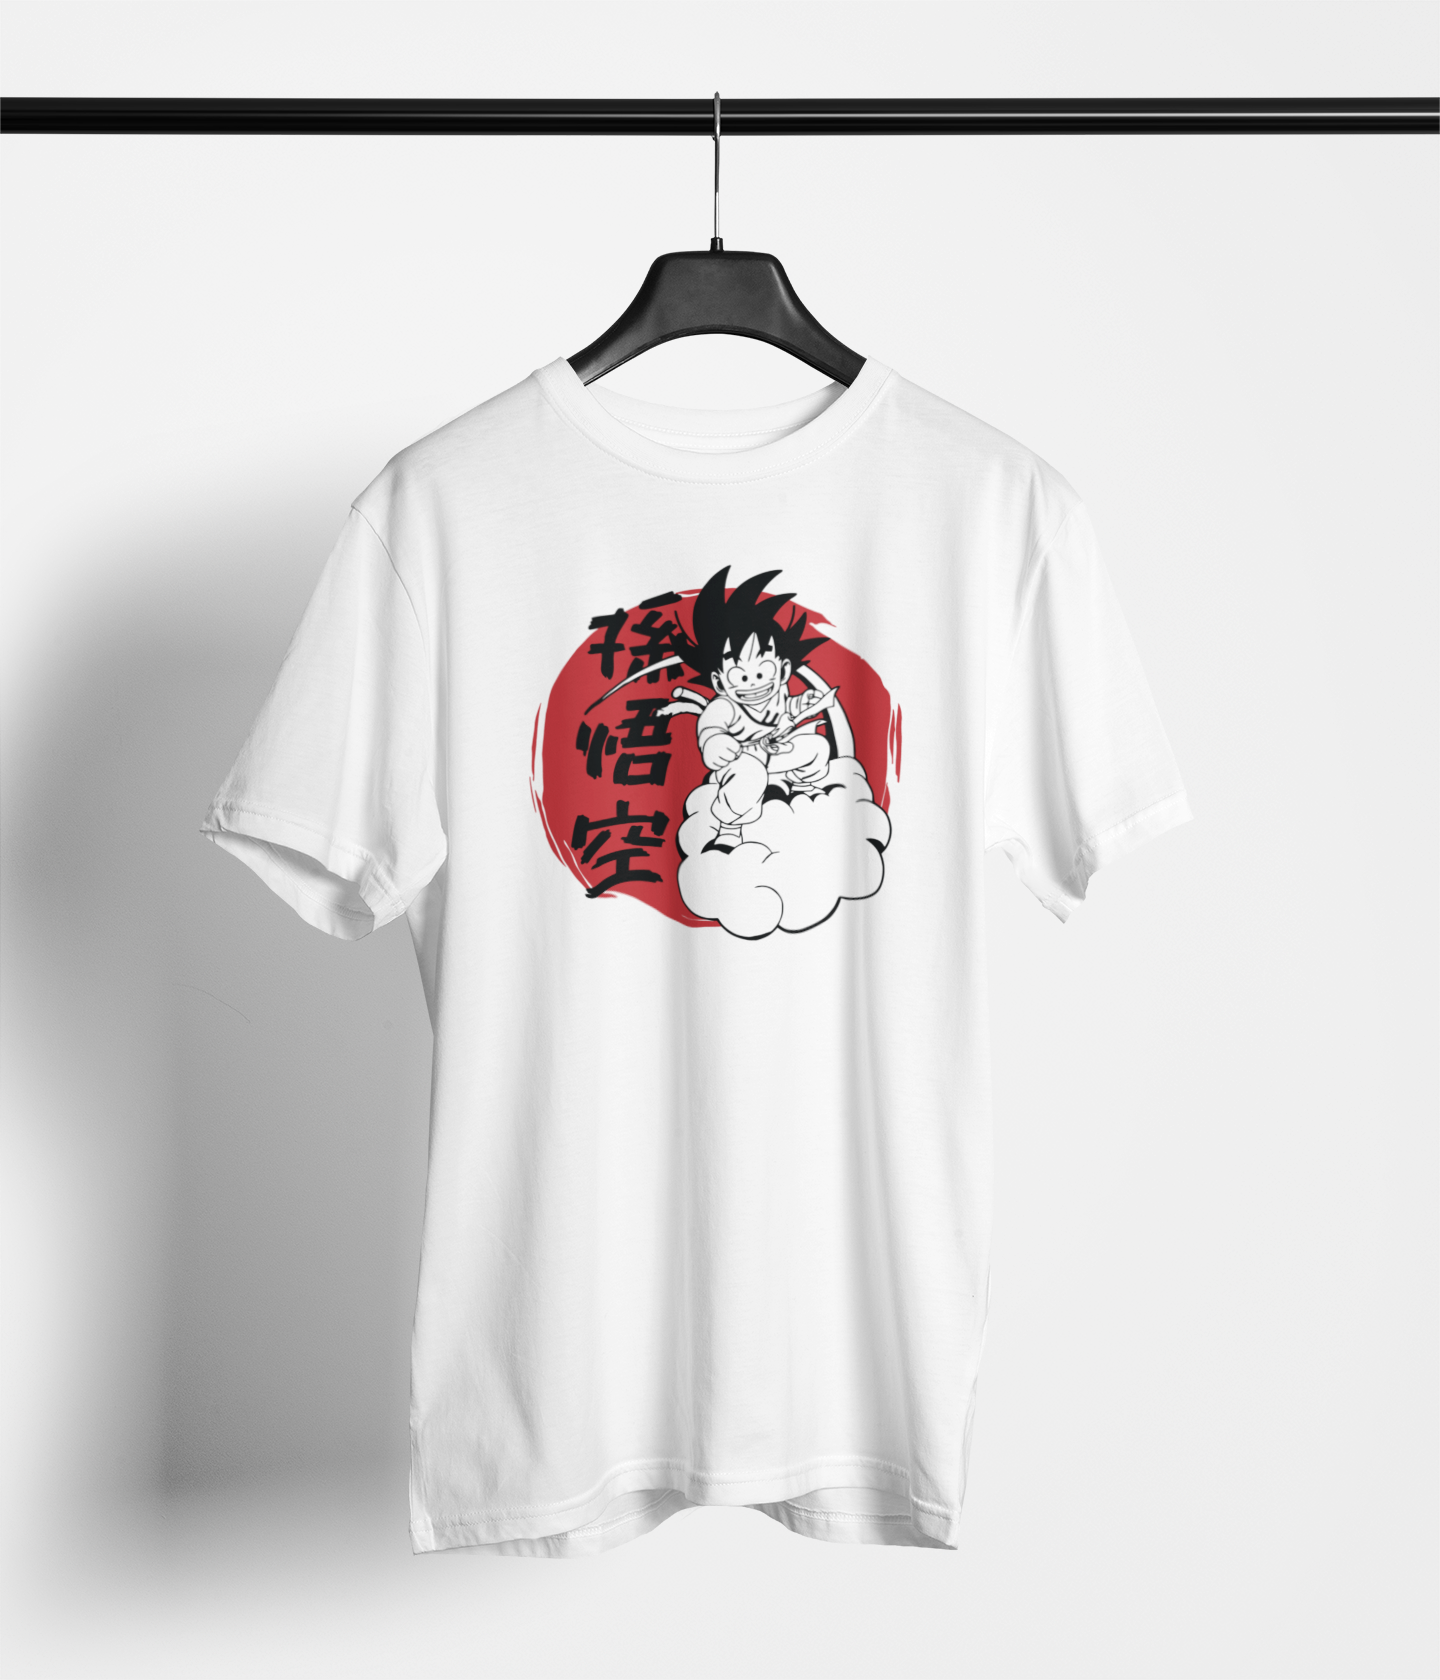 Super Saiyan Style: Goku Dragon Ball Z T-Shirt